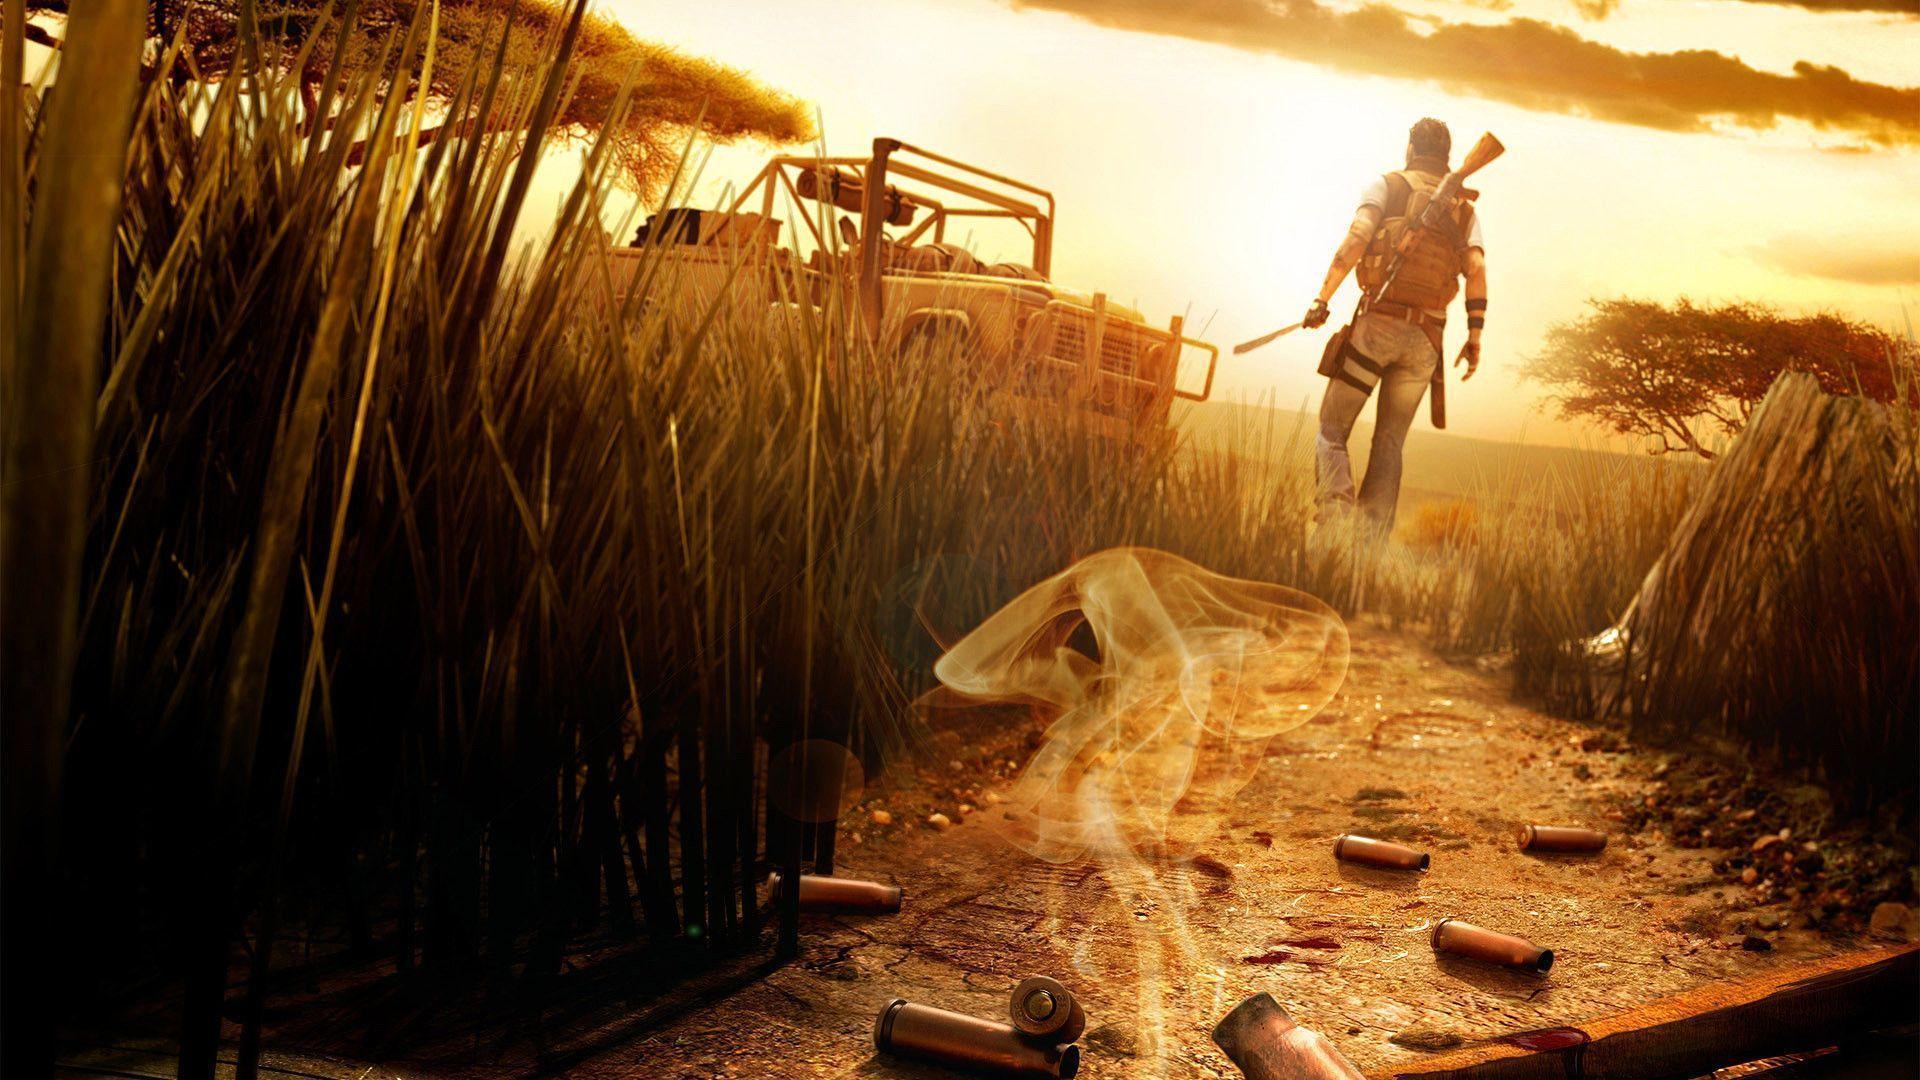 Far Cry 2 Full HD 1920x1080 Wallpaper Free Dow HD Game